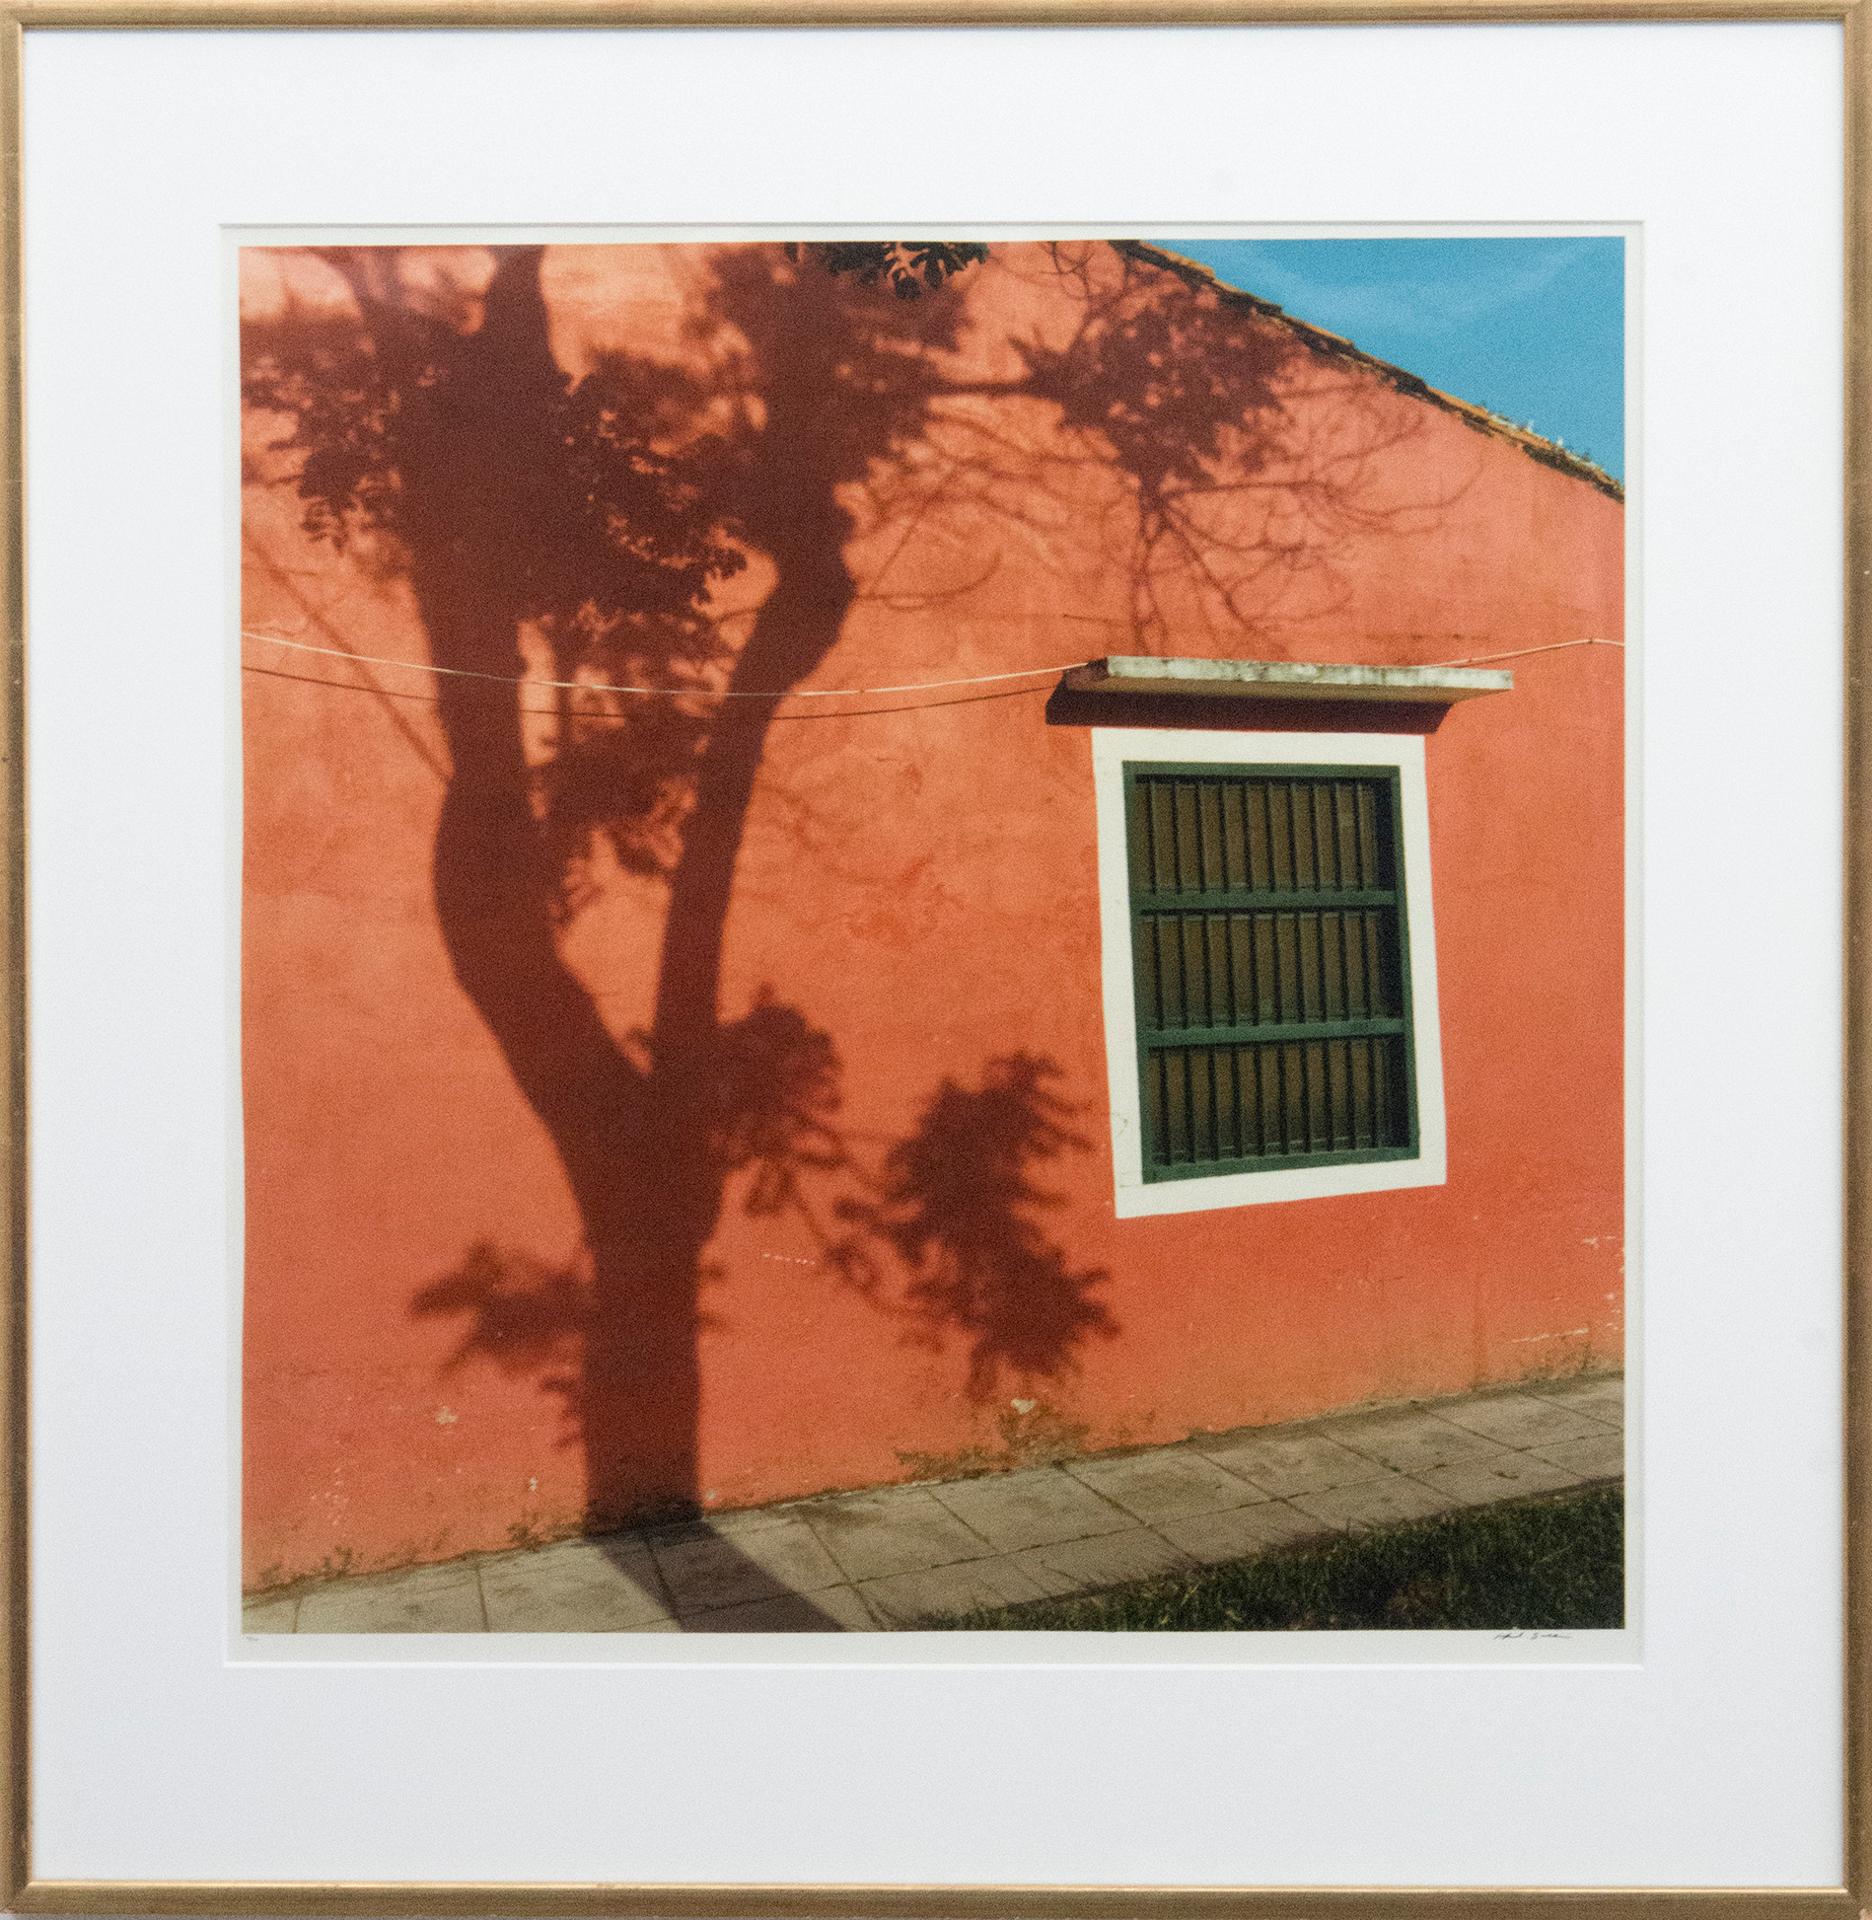 Rafael Goldchain (1953) - Tree Shadows on Red Walls, 1989